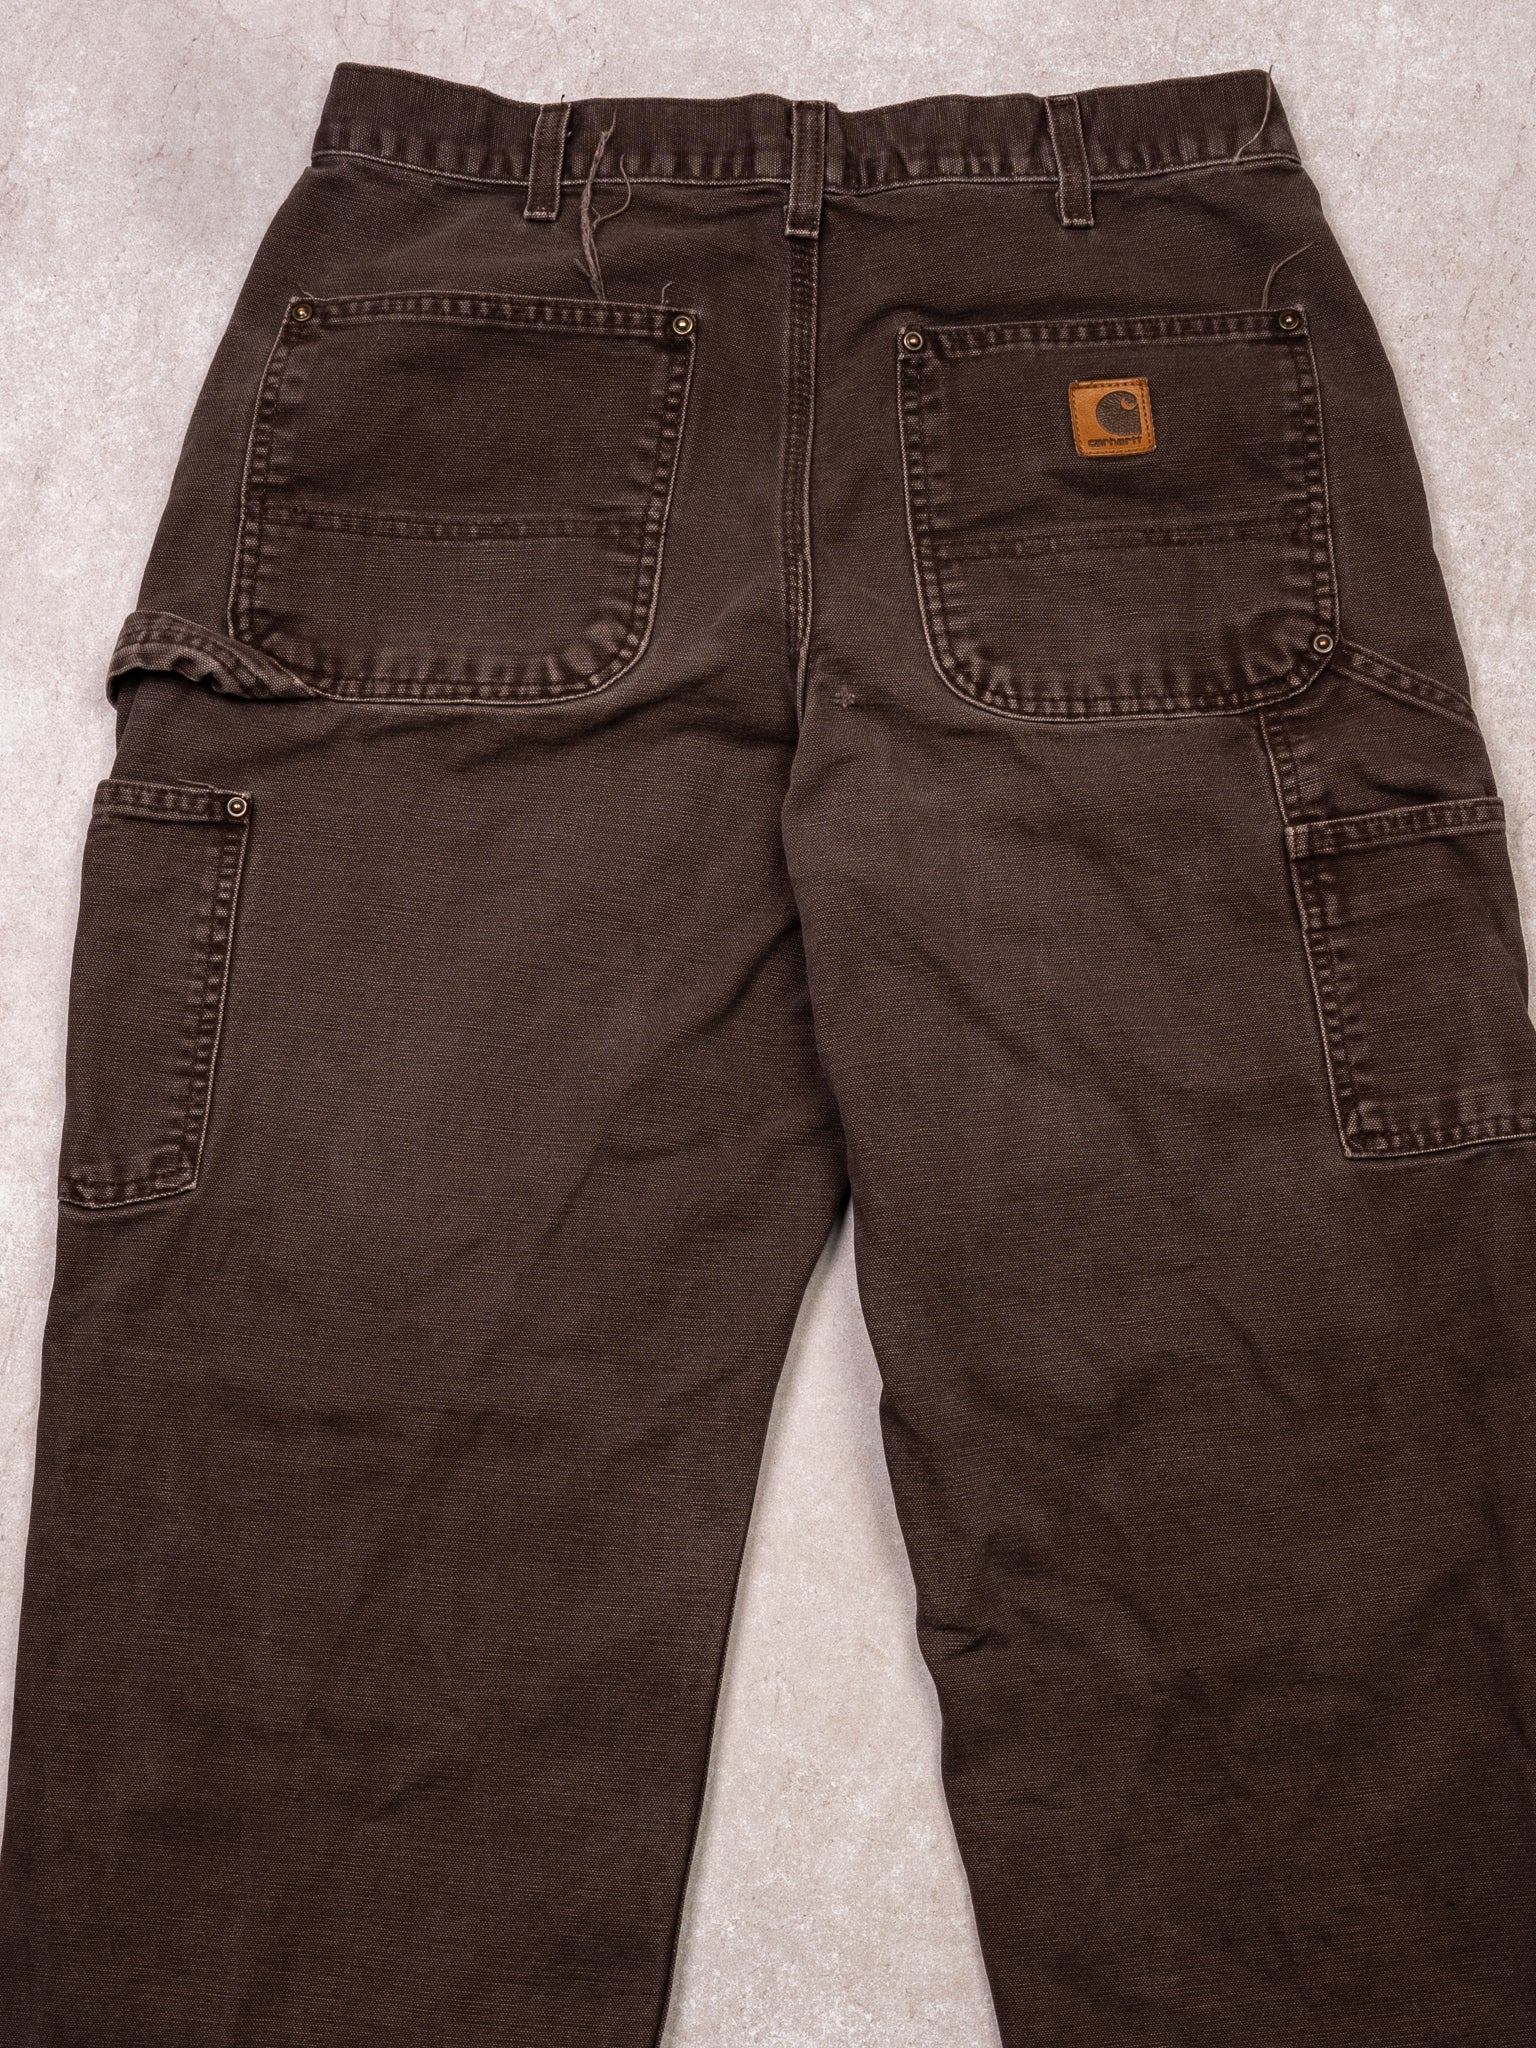 Vintage Brown Carhartt Double Knee Cargo Pants (30 x 32)